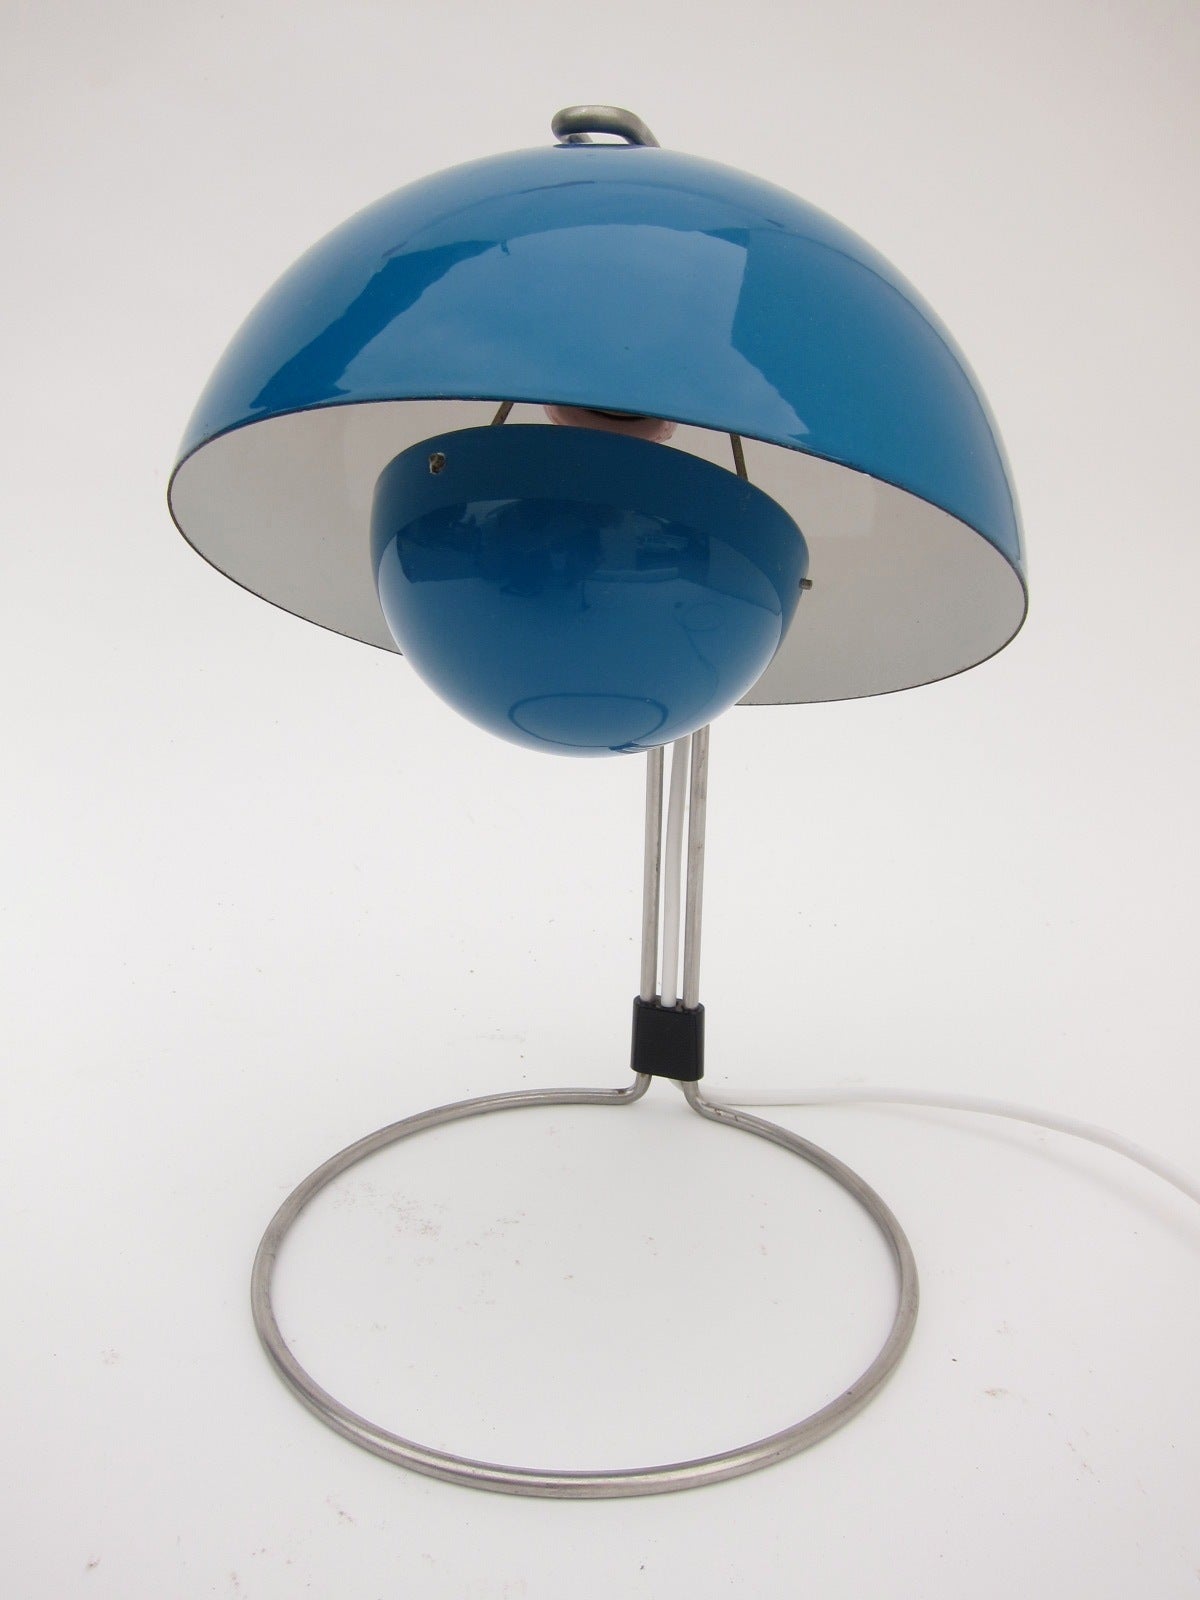 Flower pot desk lamp by Verner Panton for Louis Poulsen. Mukydydzdgfc v arked with manufacturer sticker label.